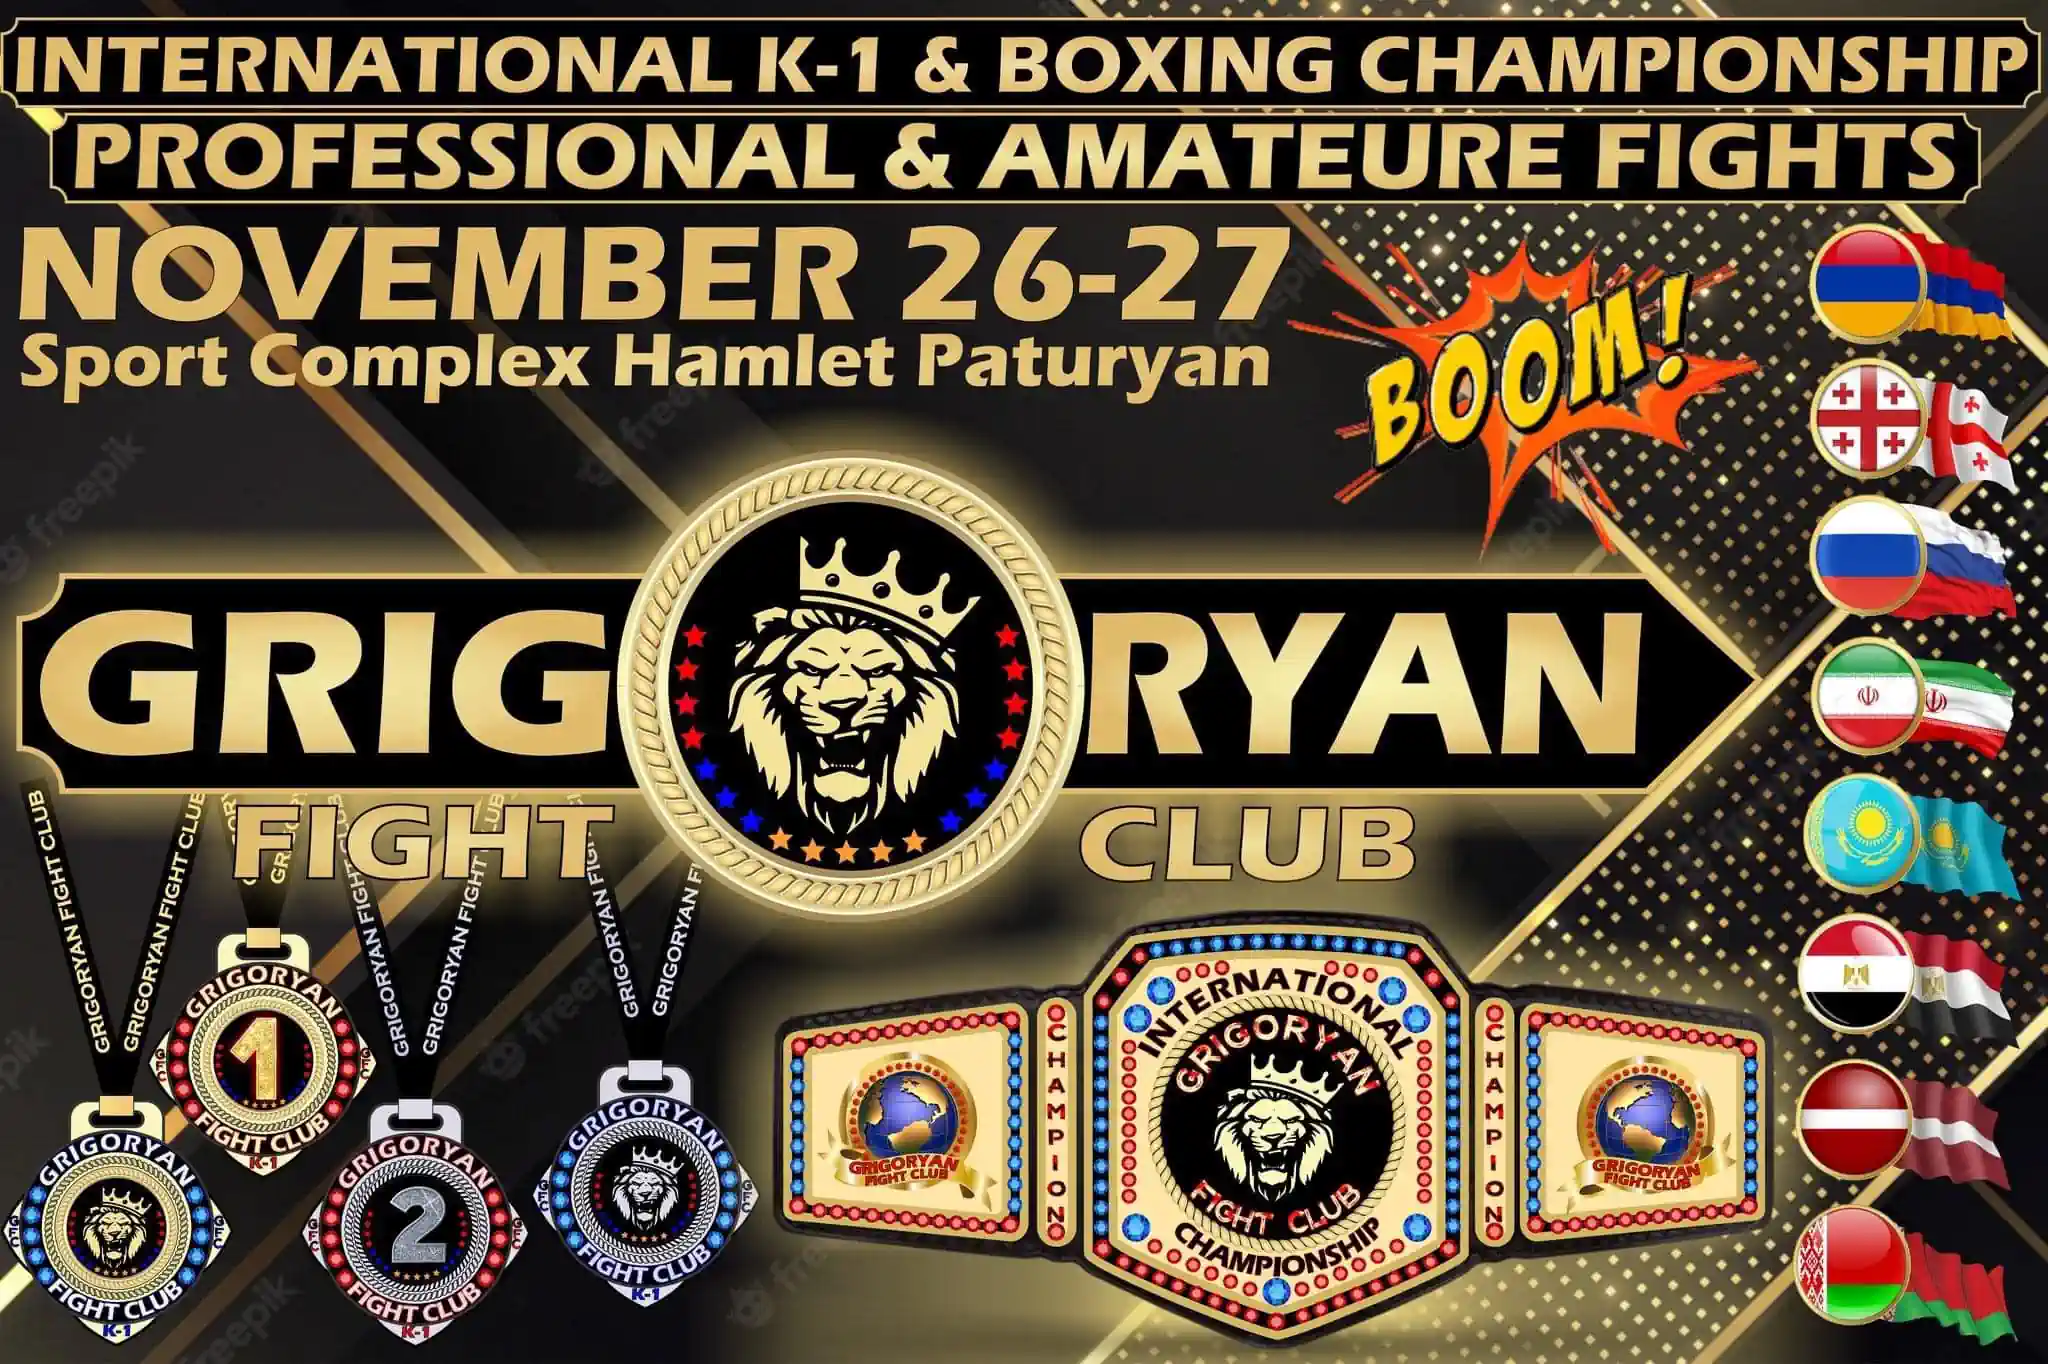 Grigoryan Fight Club